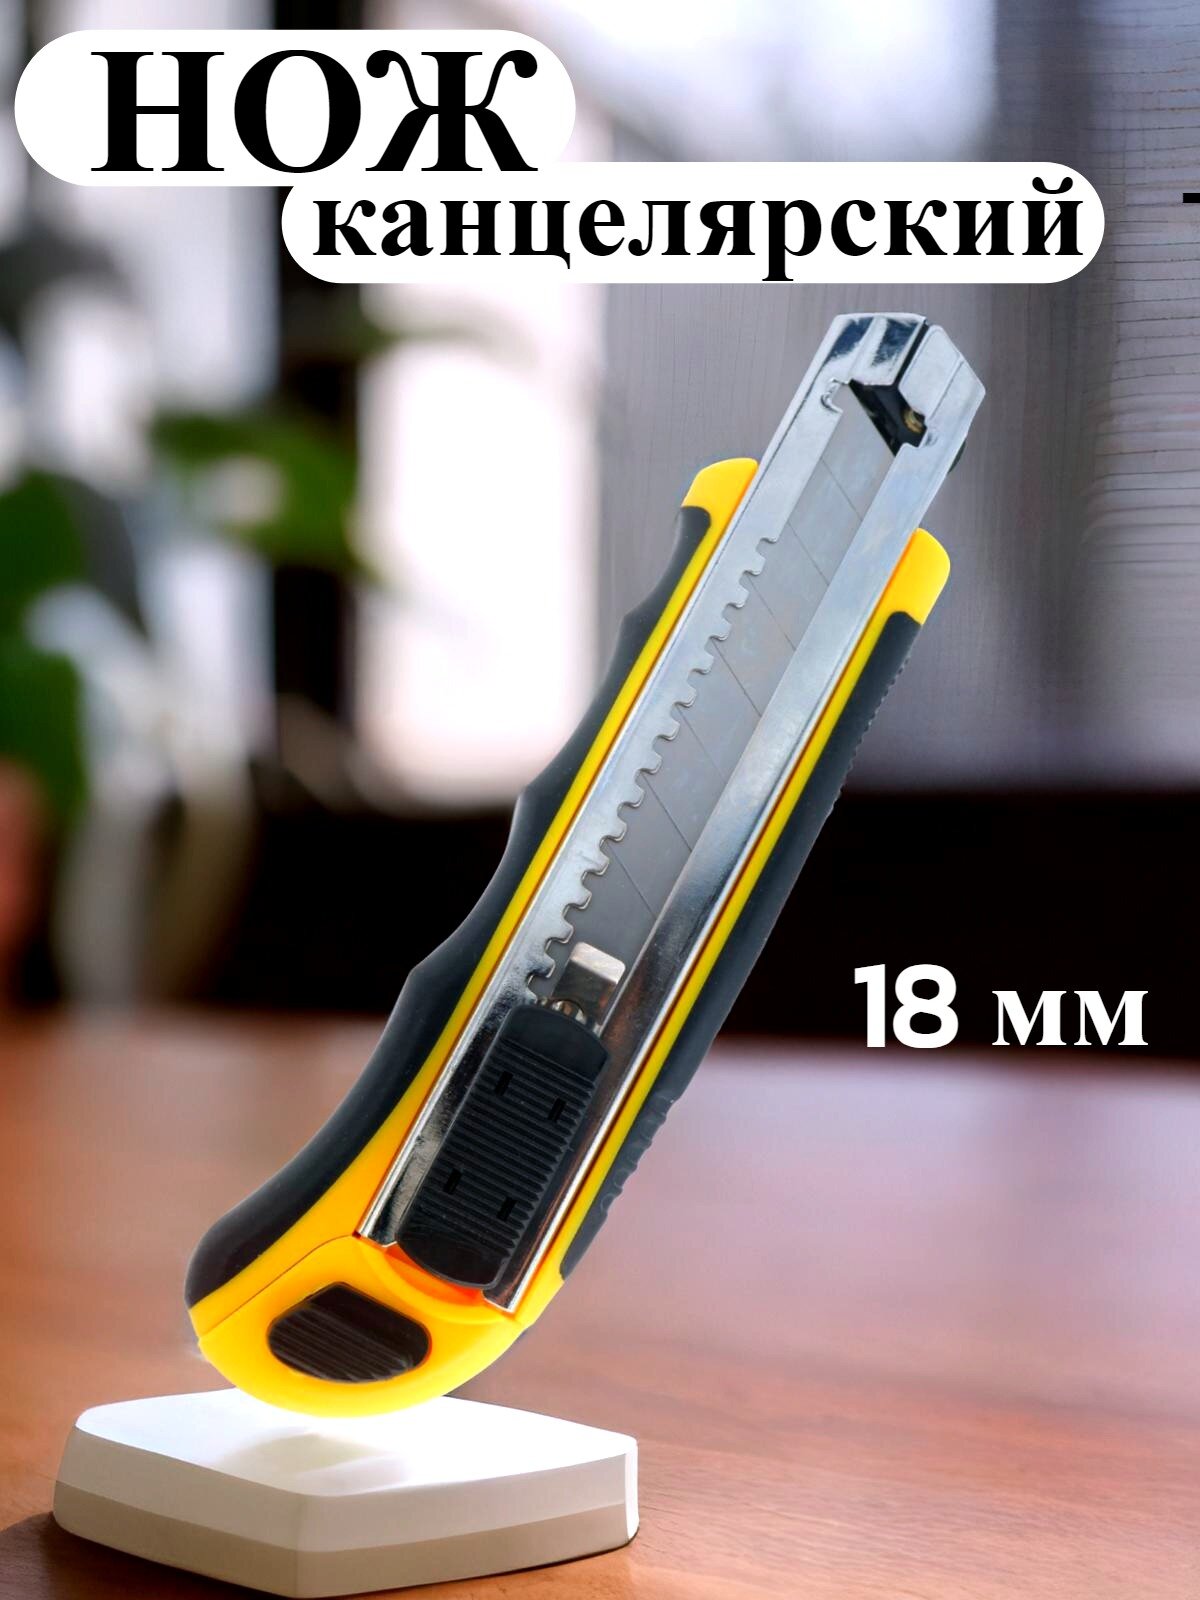 Нож канцелярский 18 мм Workmate металлические направляющие, автофиксатор, автоподача лезвия, 5 лезвий